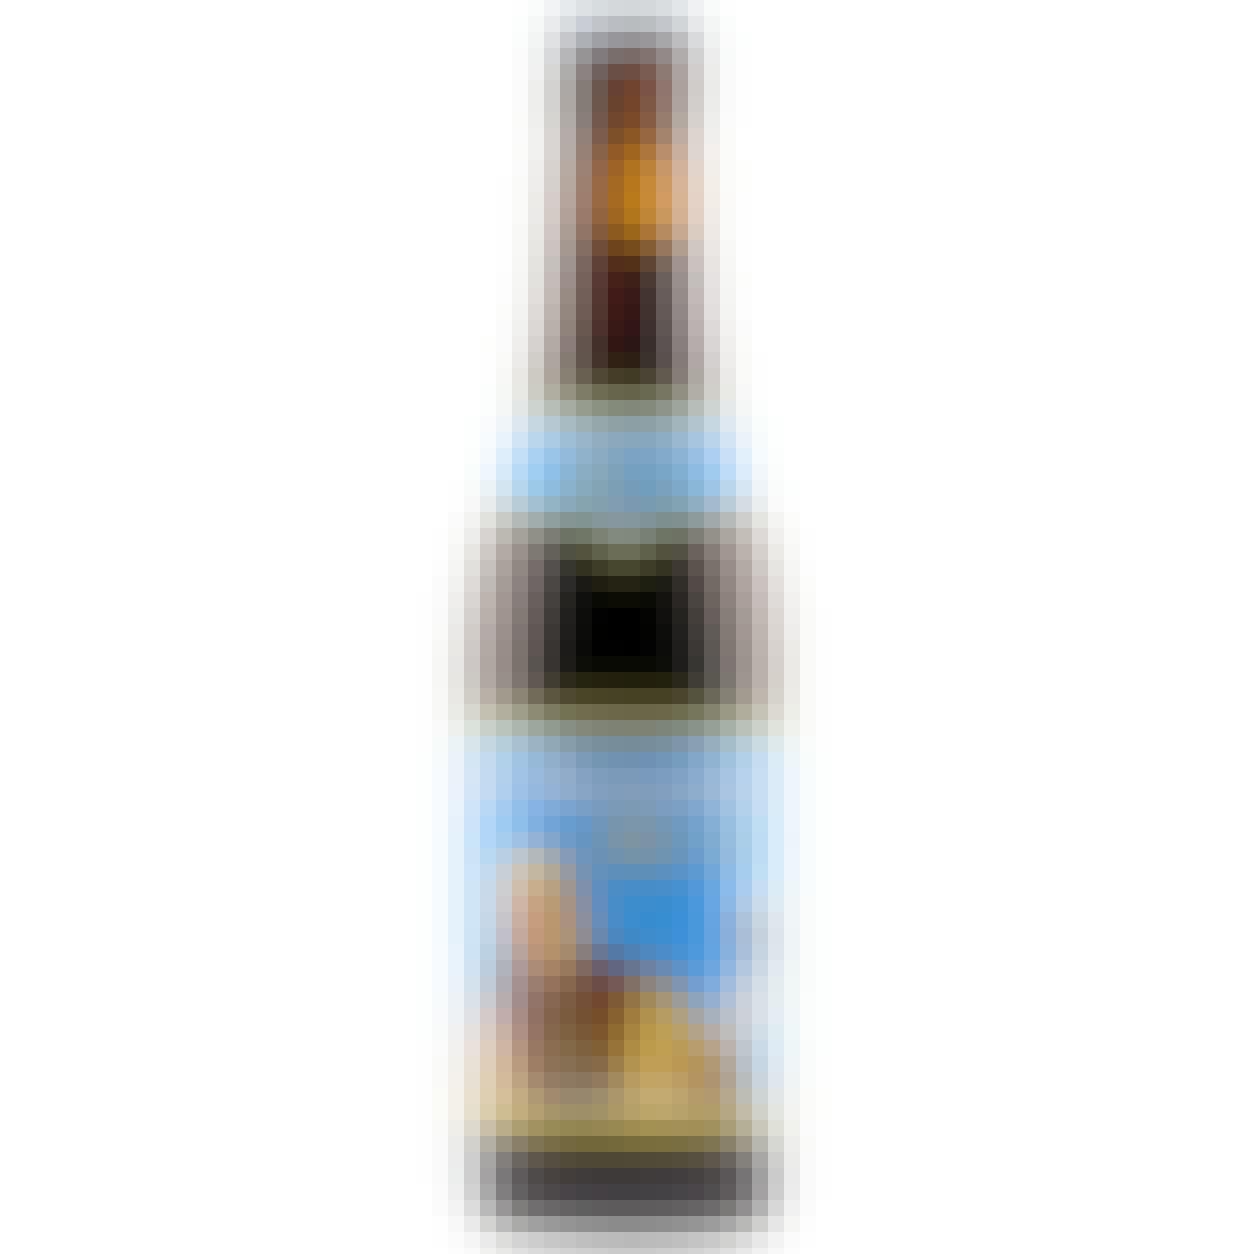 St. Bernardus Abt 12 4 pack 11.2 oz. Bottle